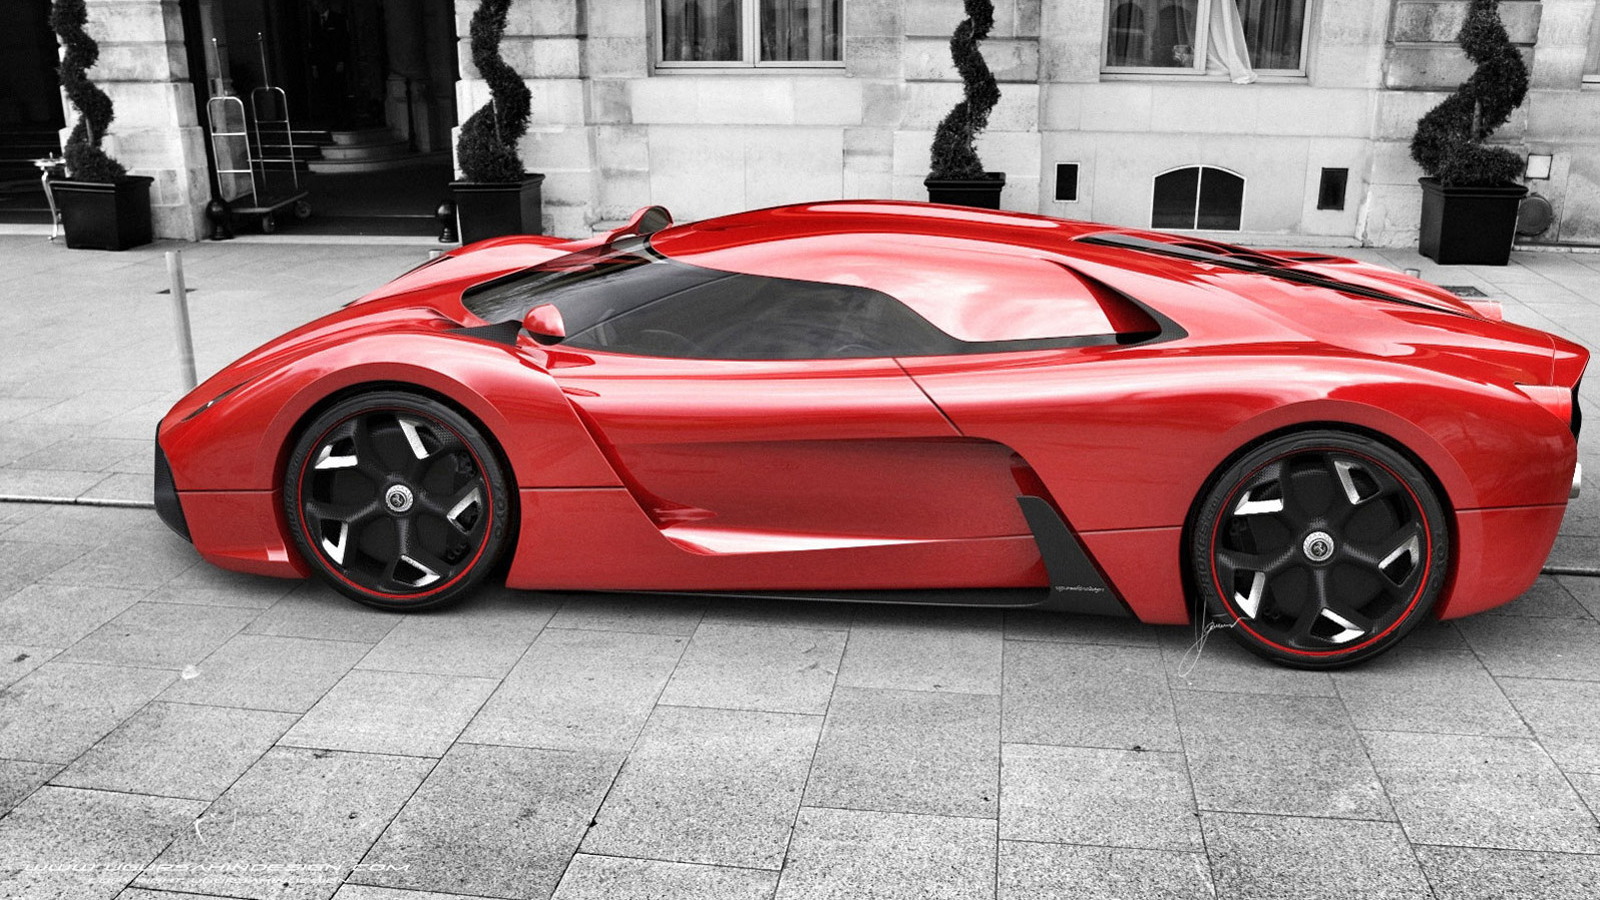 Ugur Sahin Design Project F based on the Ferrari 458 Italia